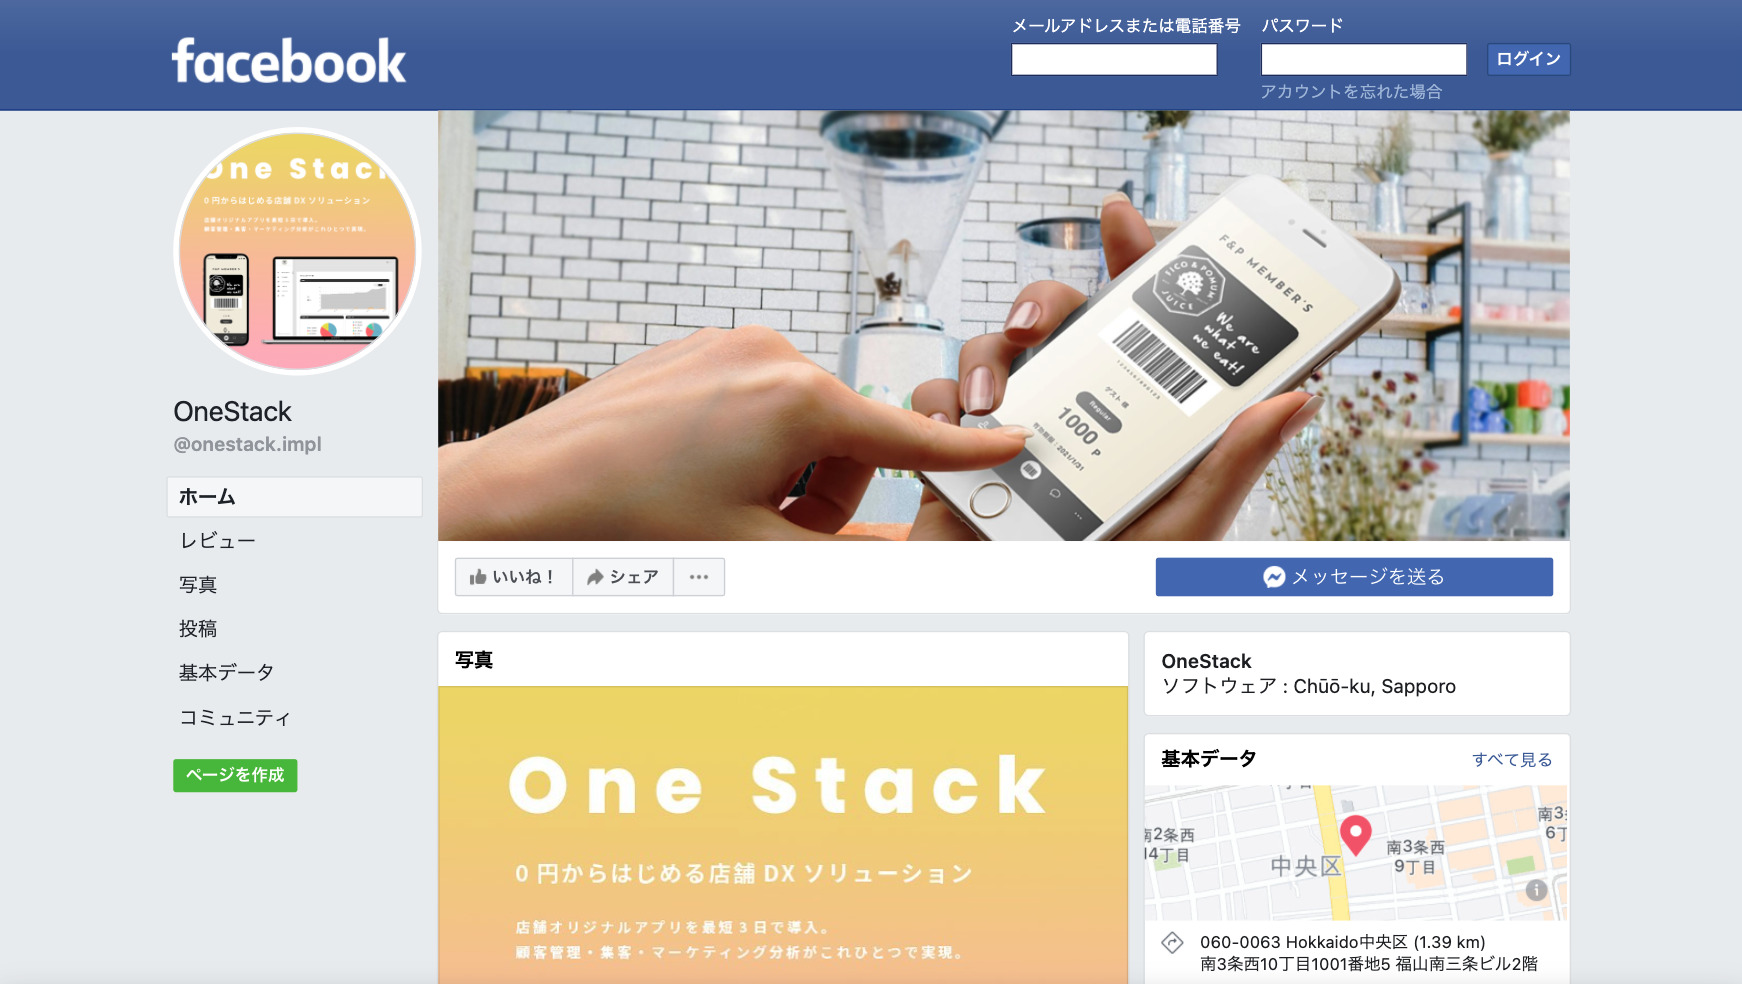 【OneStack】SNS公式アカウント開設のお知らせ